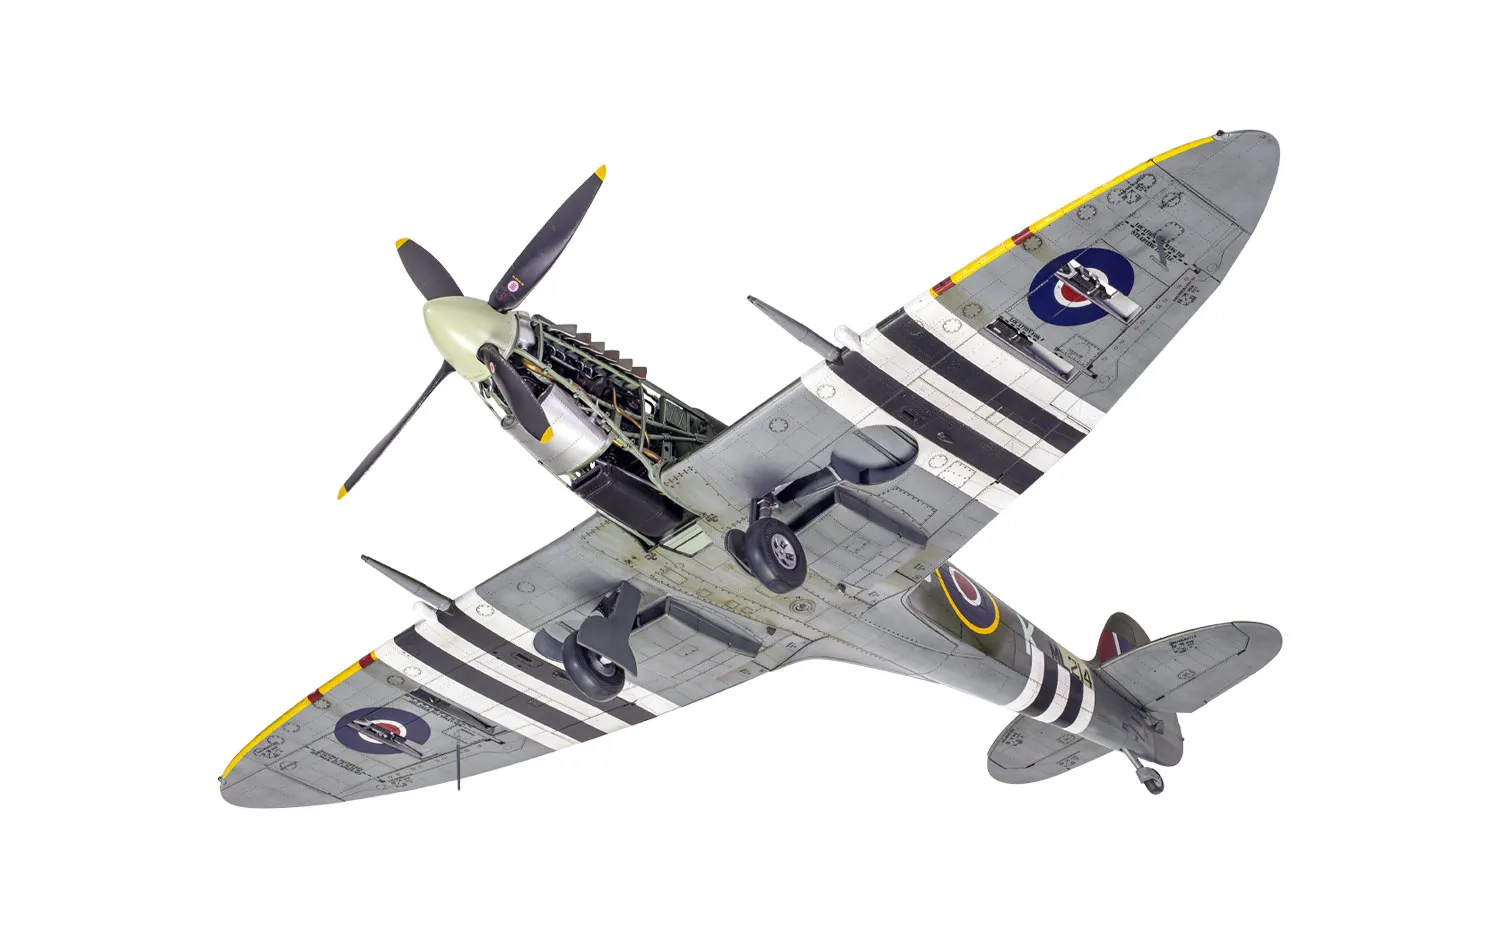 Supermarine Spitfire Mk.Ixc